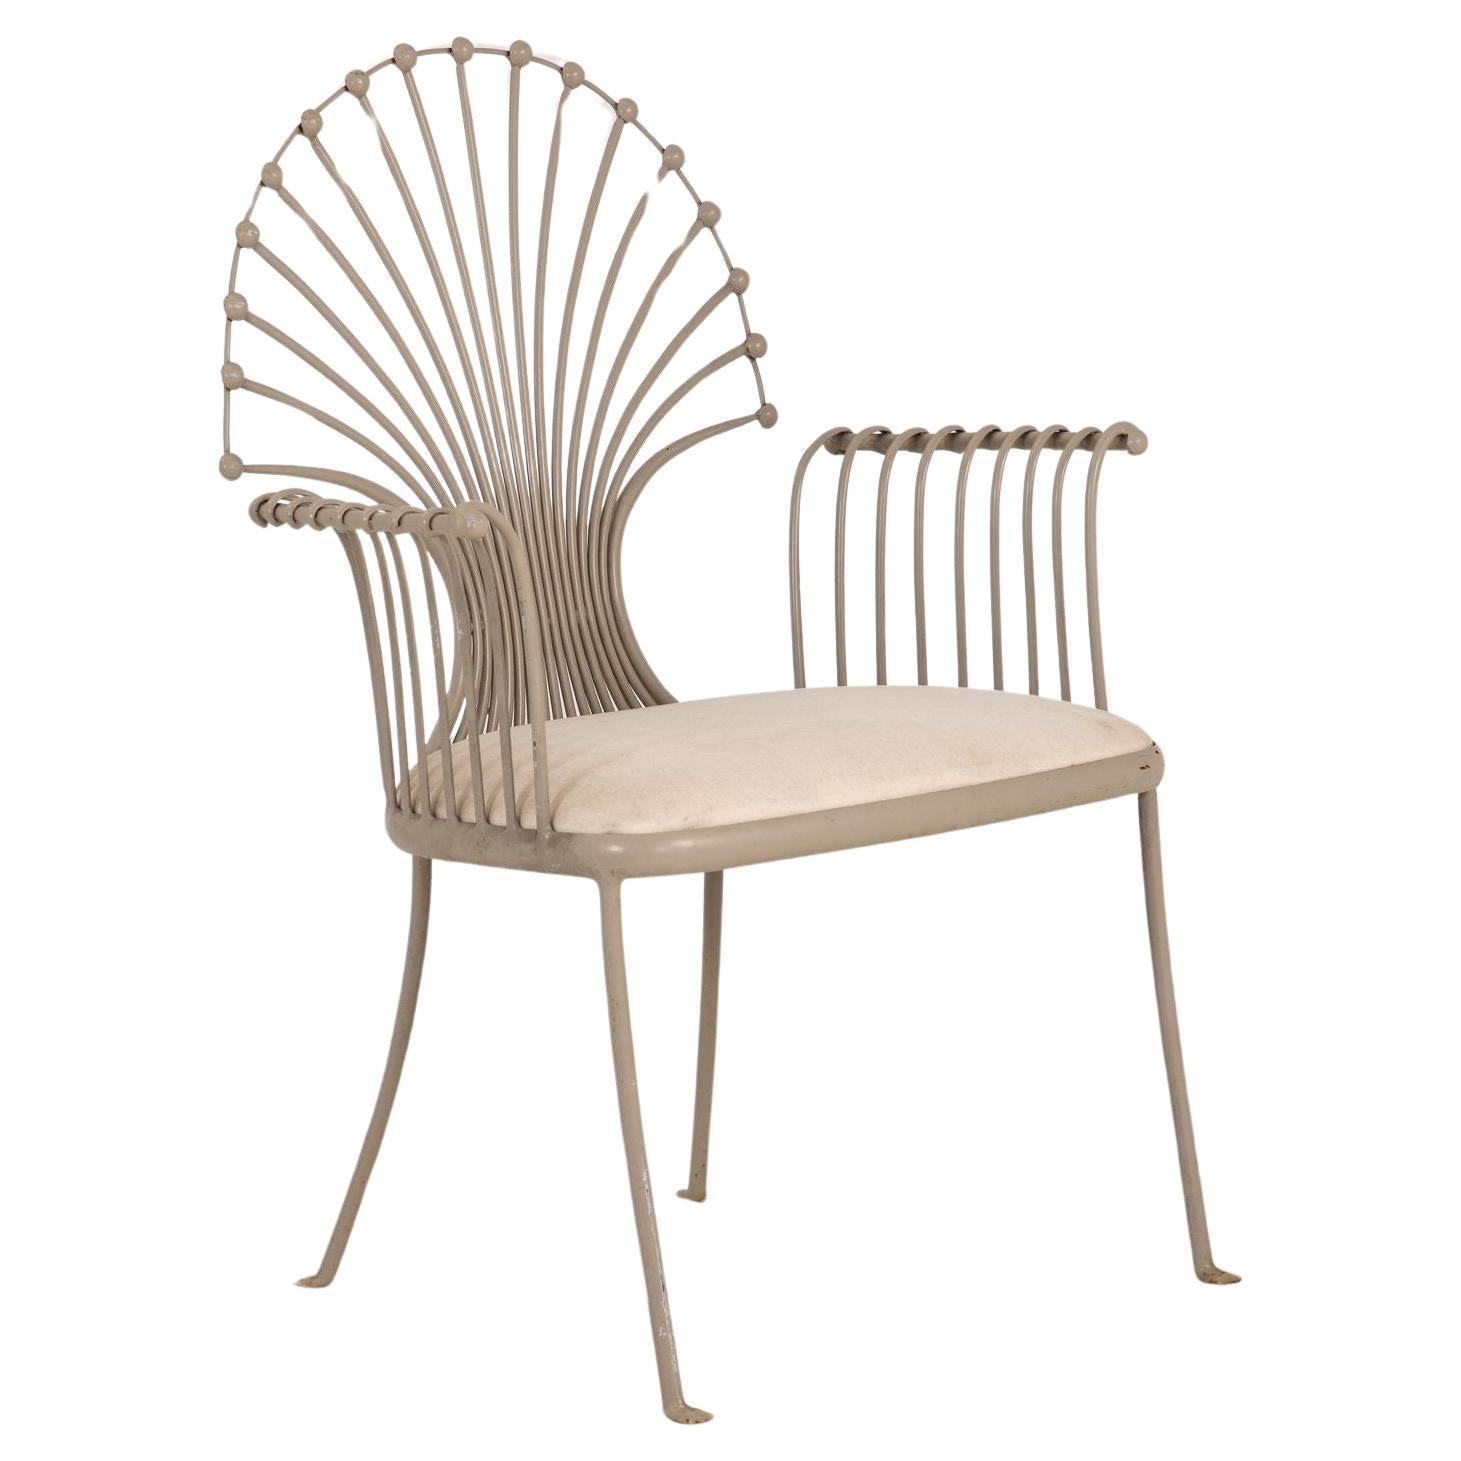 Sessel mit Pfauen- oder Weizengarbenblattmotiv, grau lackiertes Aluminium, Sessel